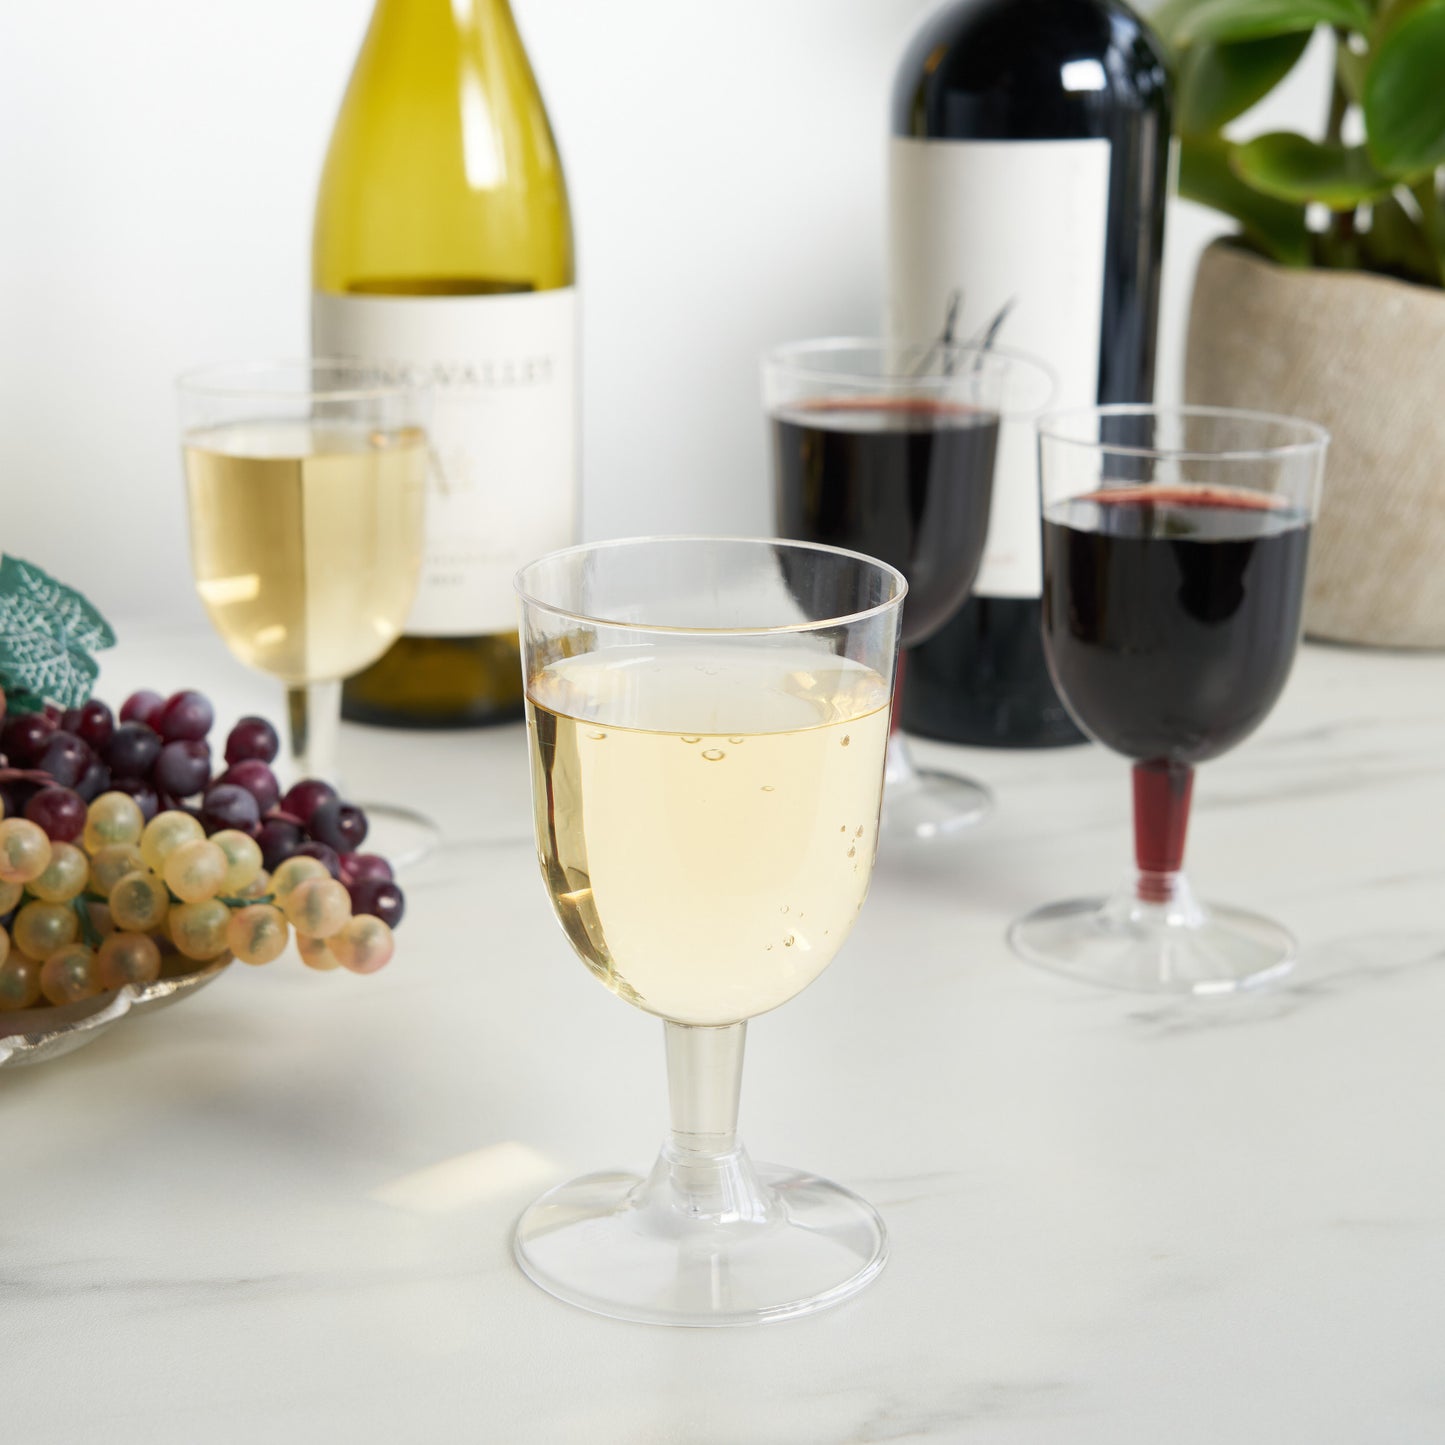 True Party: 6 oz Plastic Wine Glass Set, 20 pack